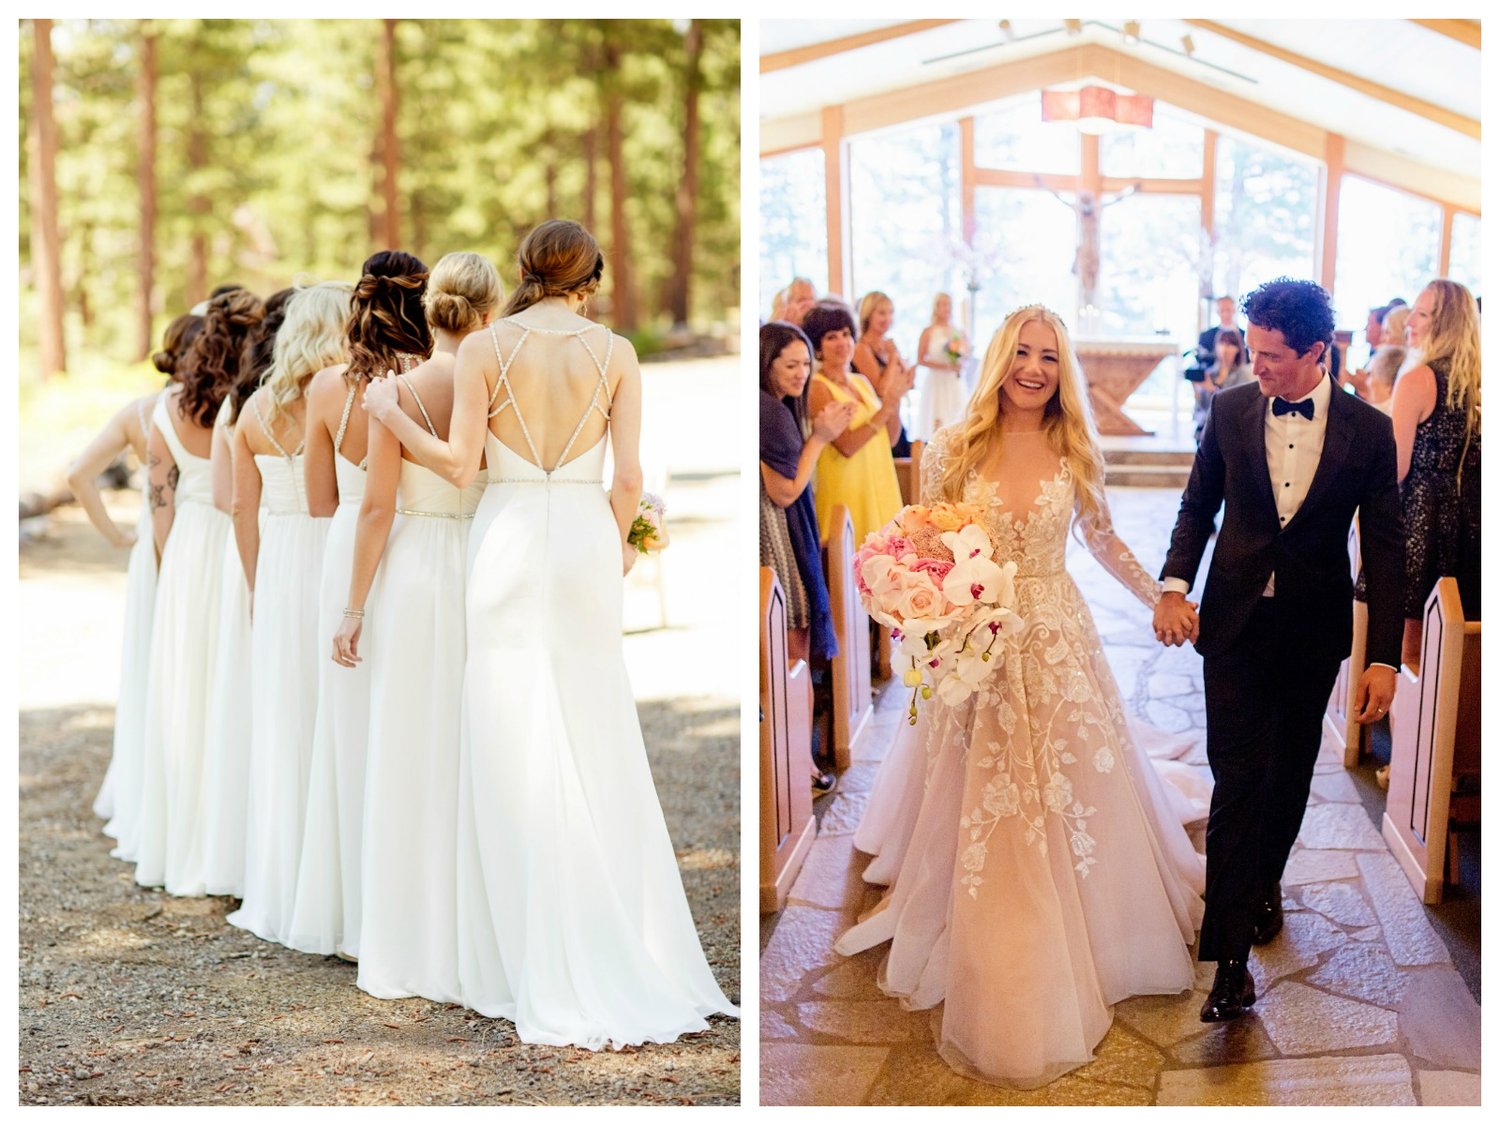 Hayley Paige Own Wedding Dress | Wedding Dress Guest